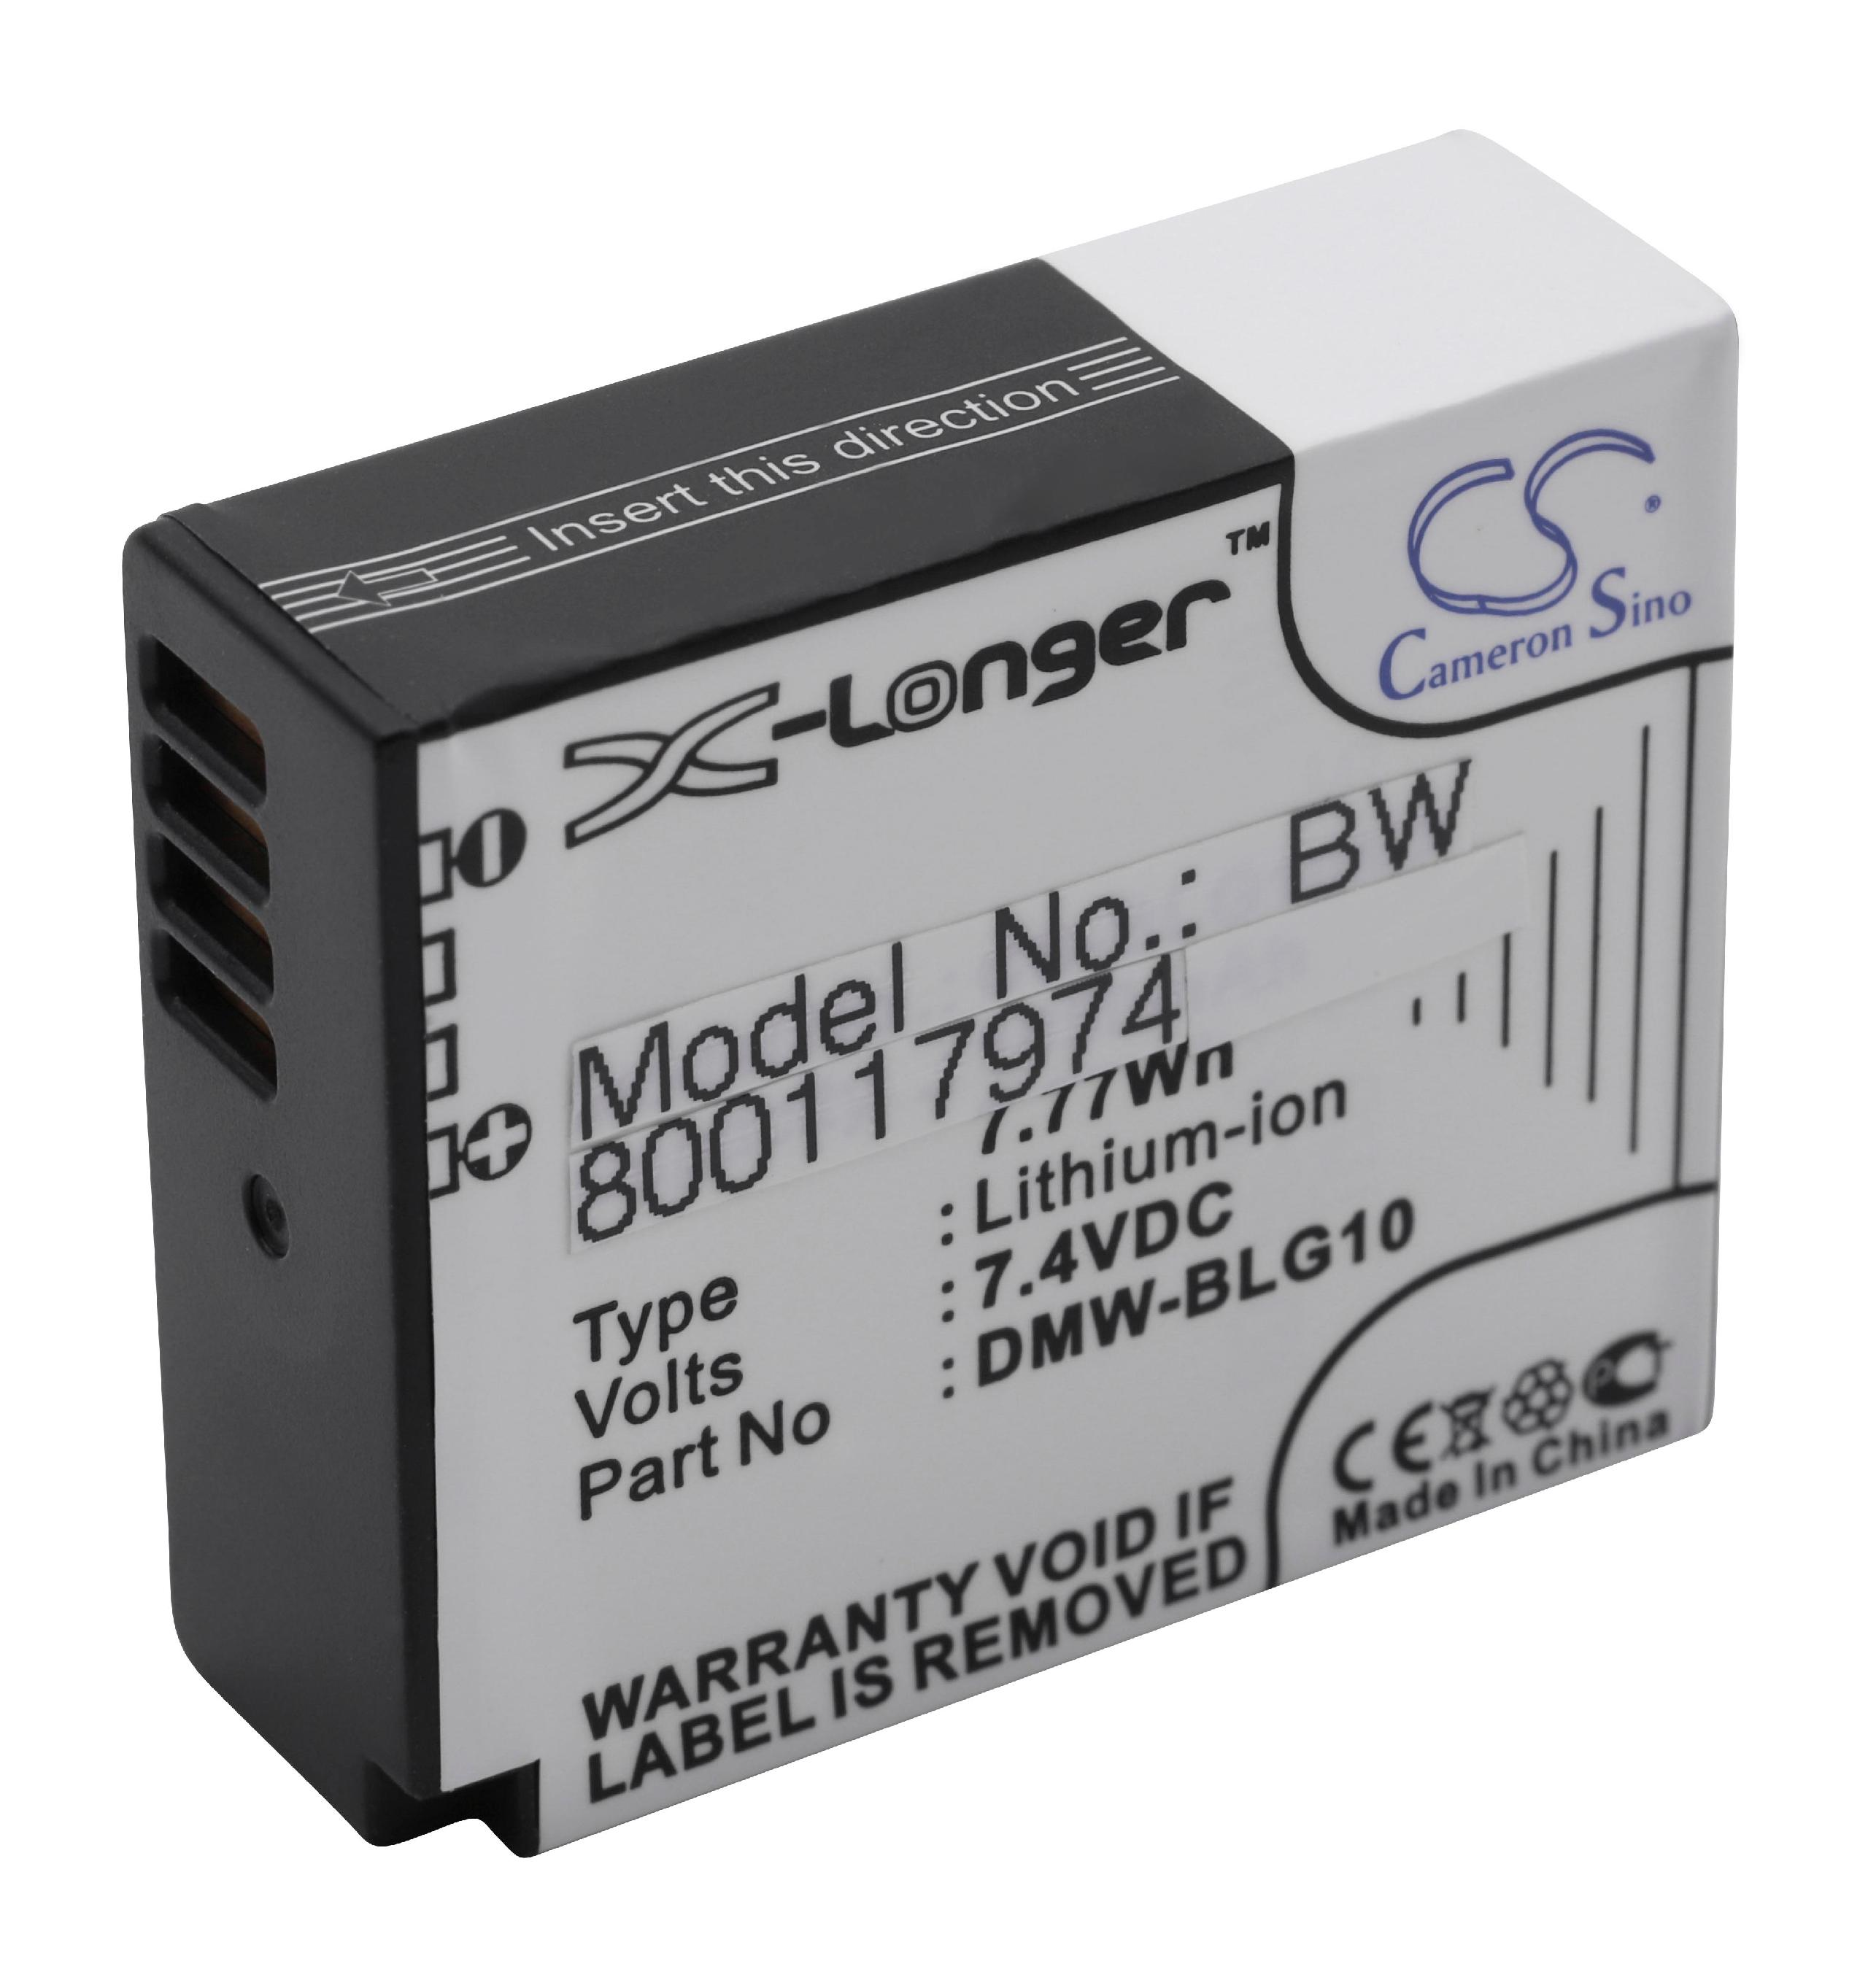 7.4 kompatibel DMC-ZS60 Li-Ion Lumix - Akku Volt, VHBW mit 1050 Panasonic Kamera,